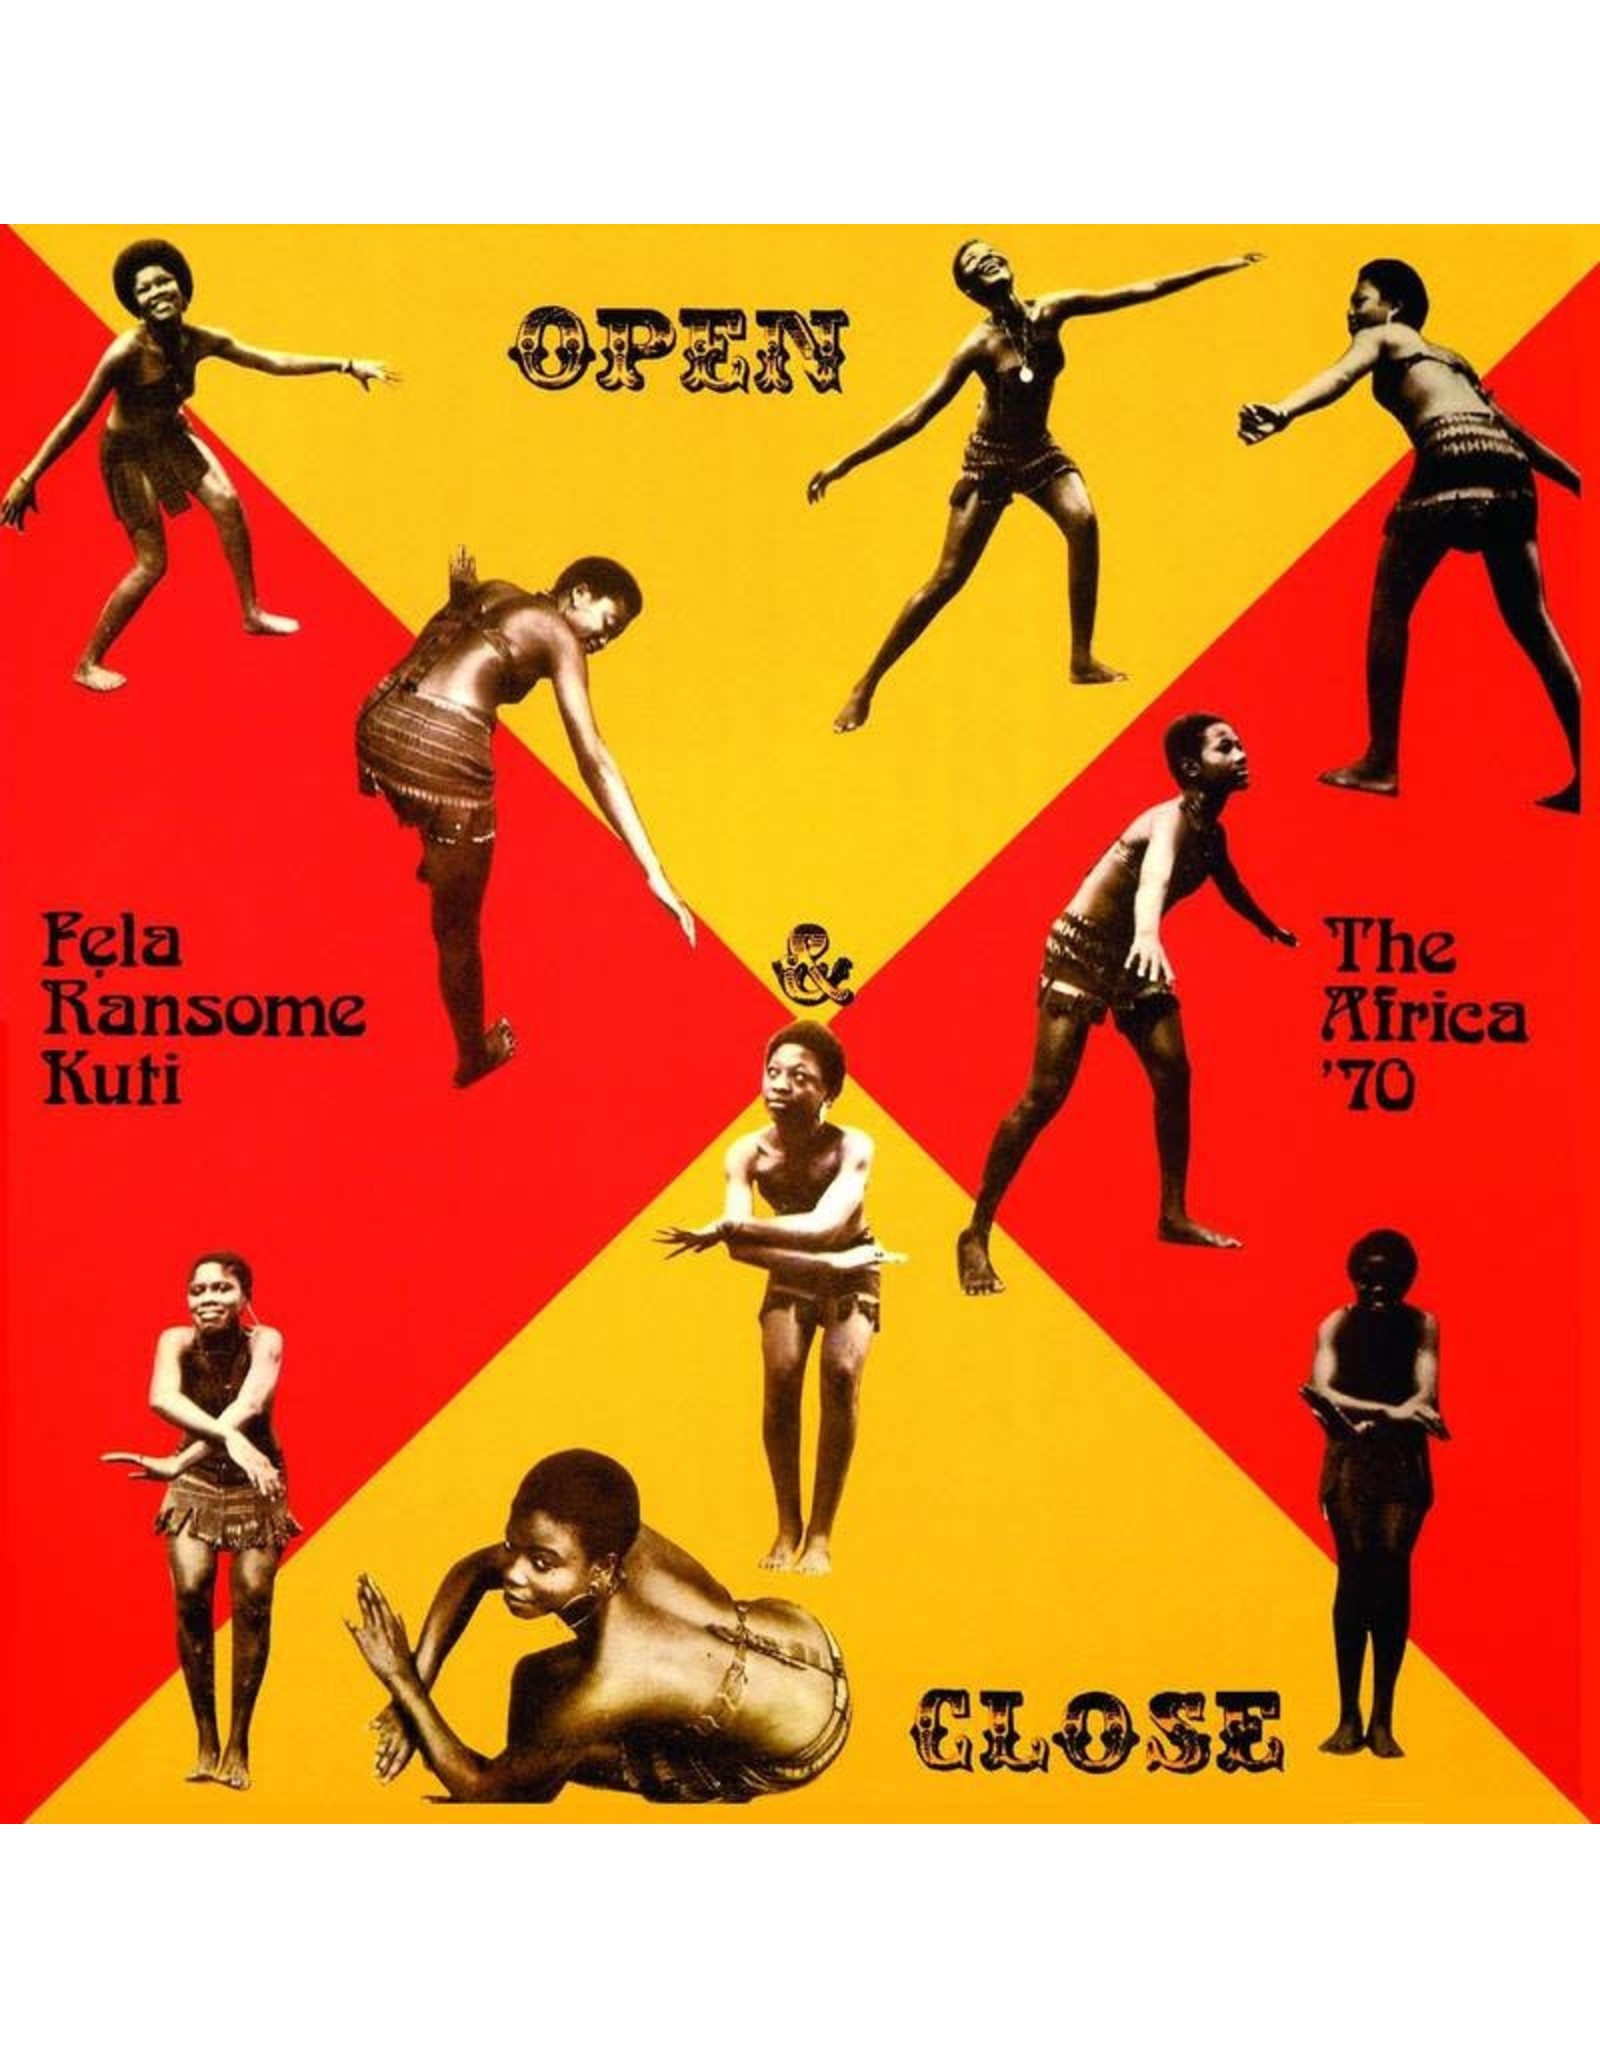 Fela Kuti - Open & Close (50th Anniversary)